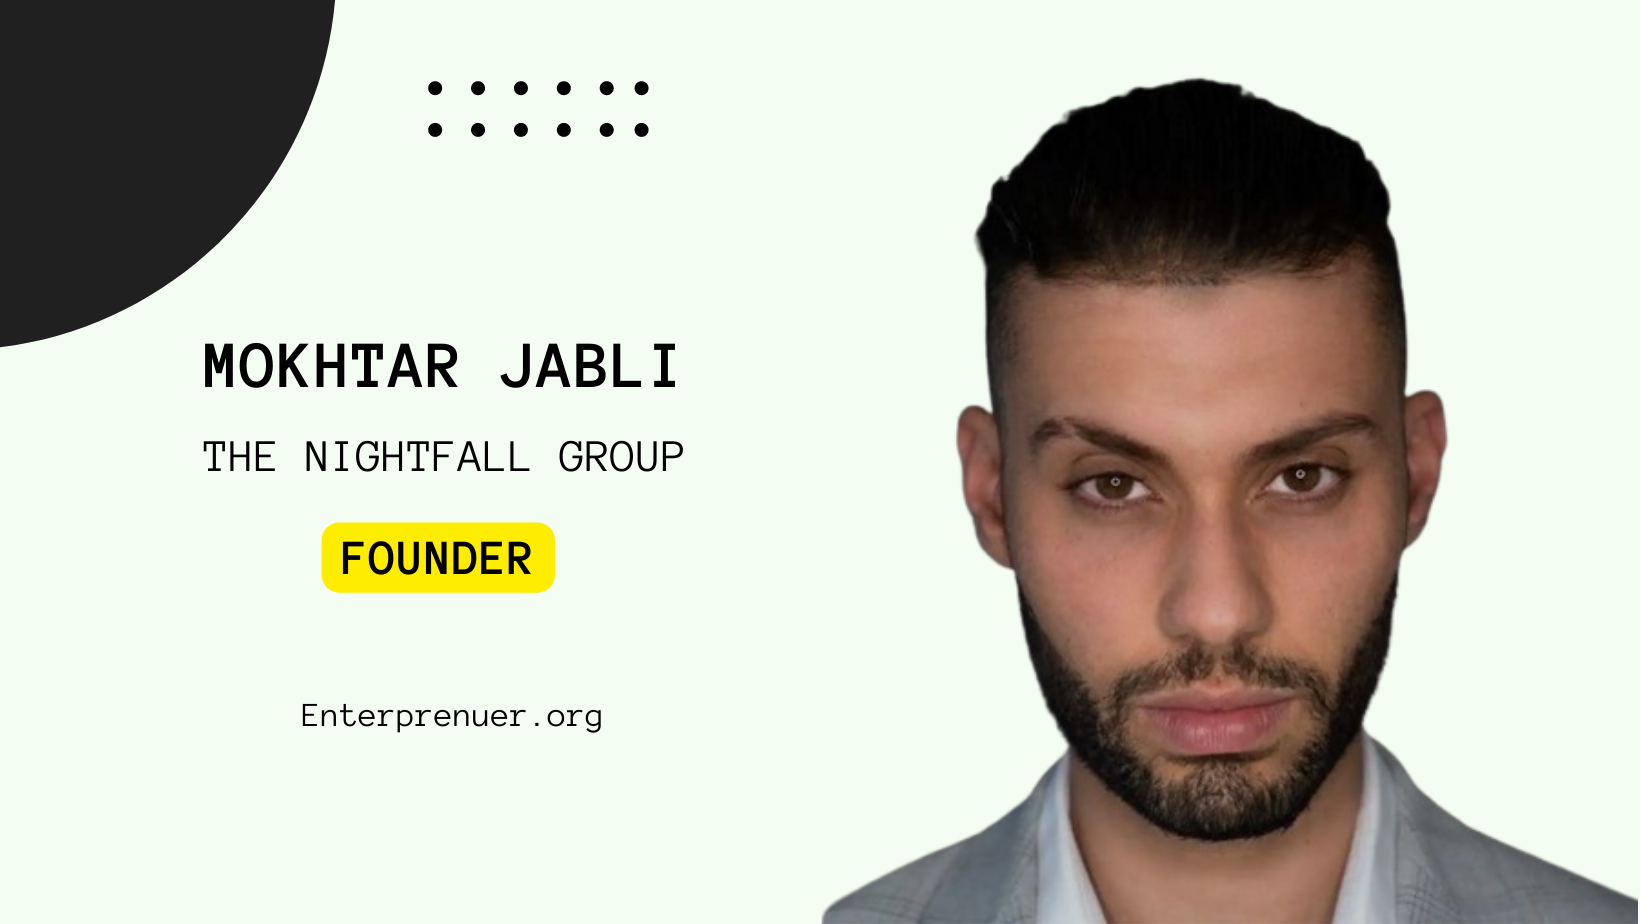 Mokhtar Jabli Founder of The Nightfall Group